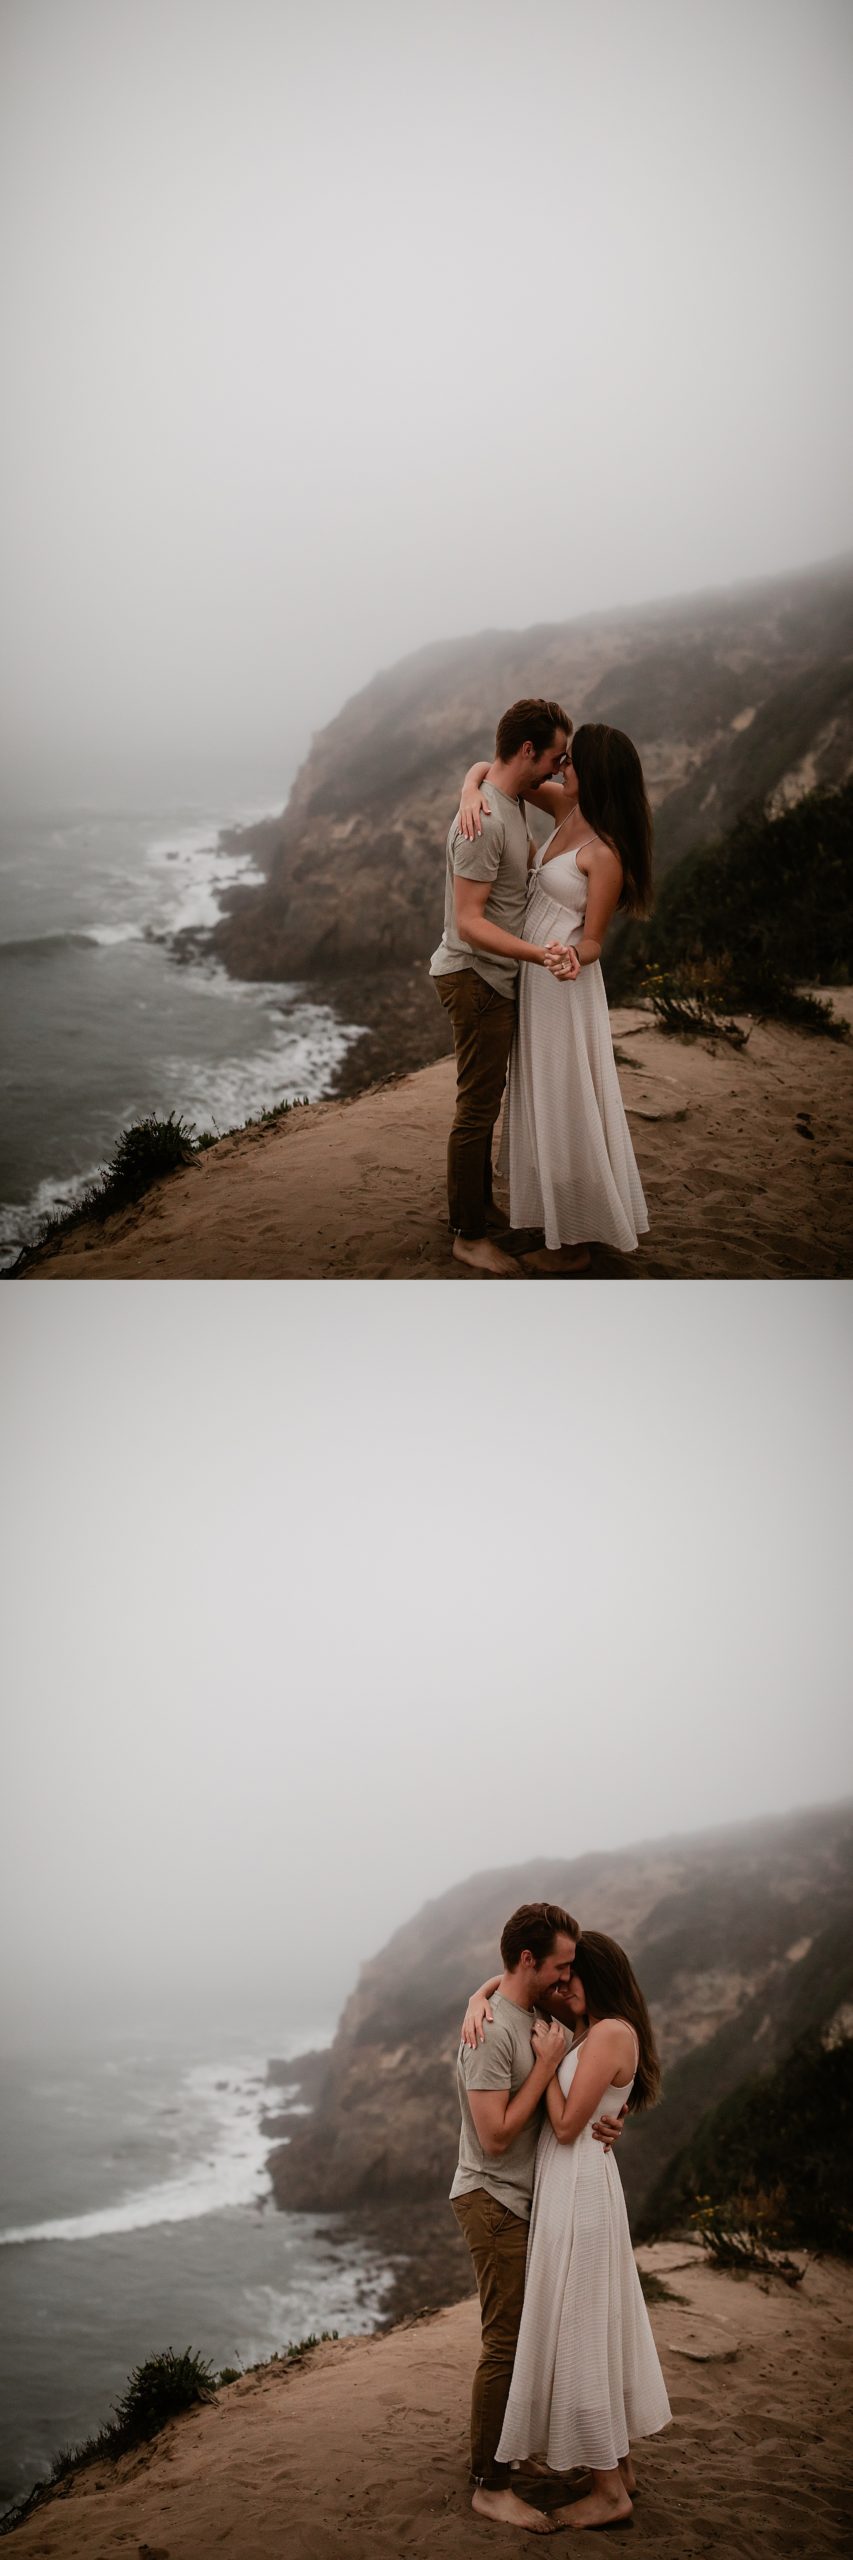 guy holding girl malibu beach engagement photos california